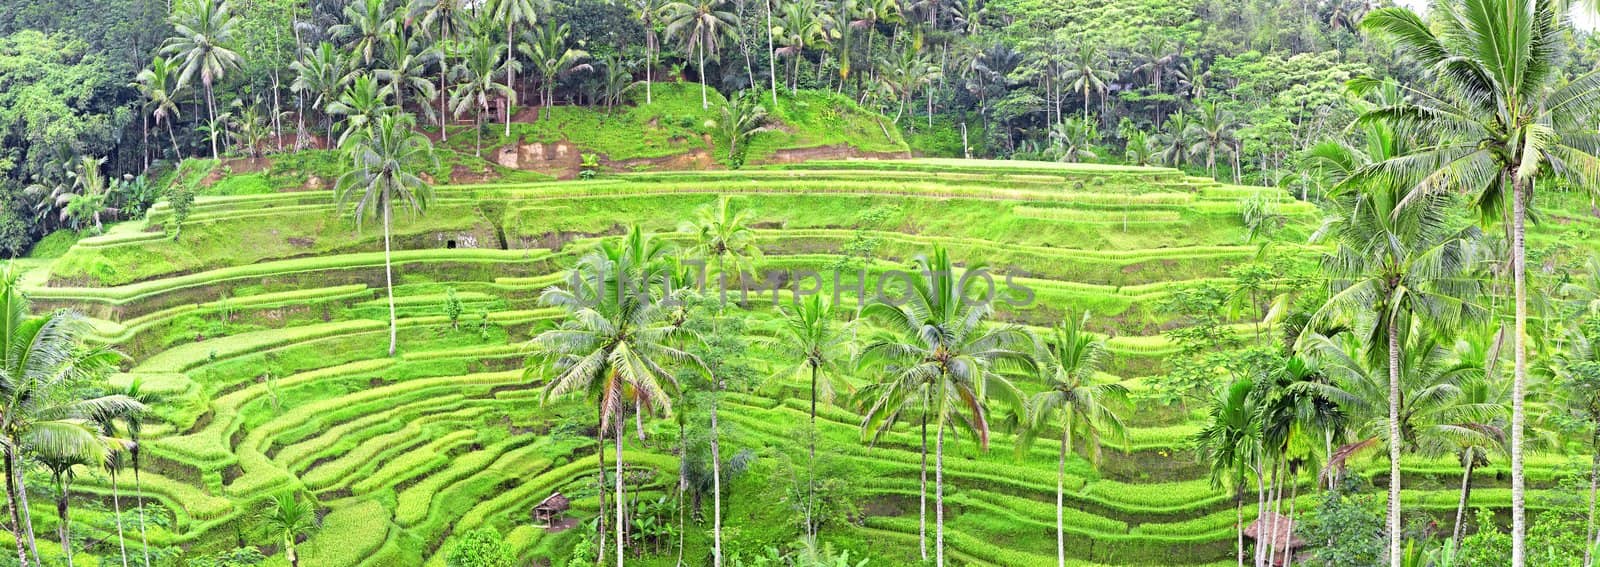 panorama of Tegalalang rice field terraces, Bali, Indonesia by zhu_zhu